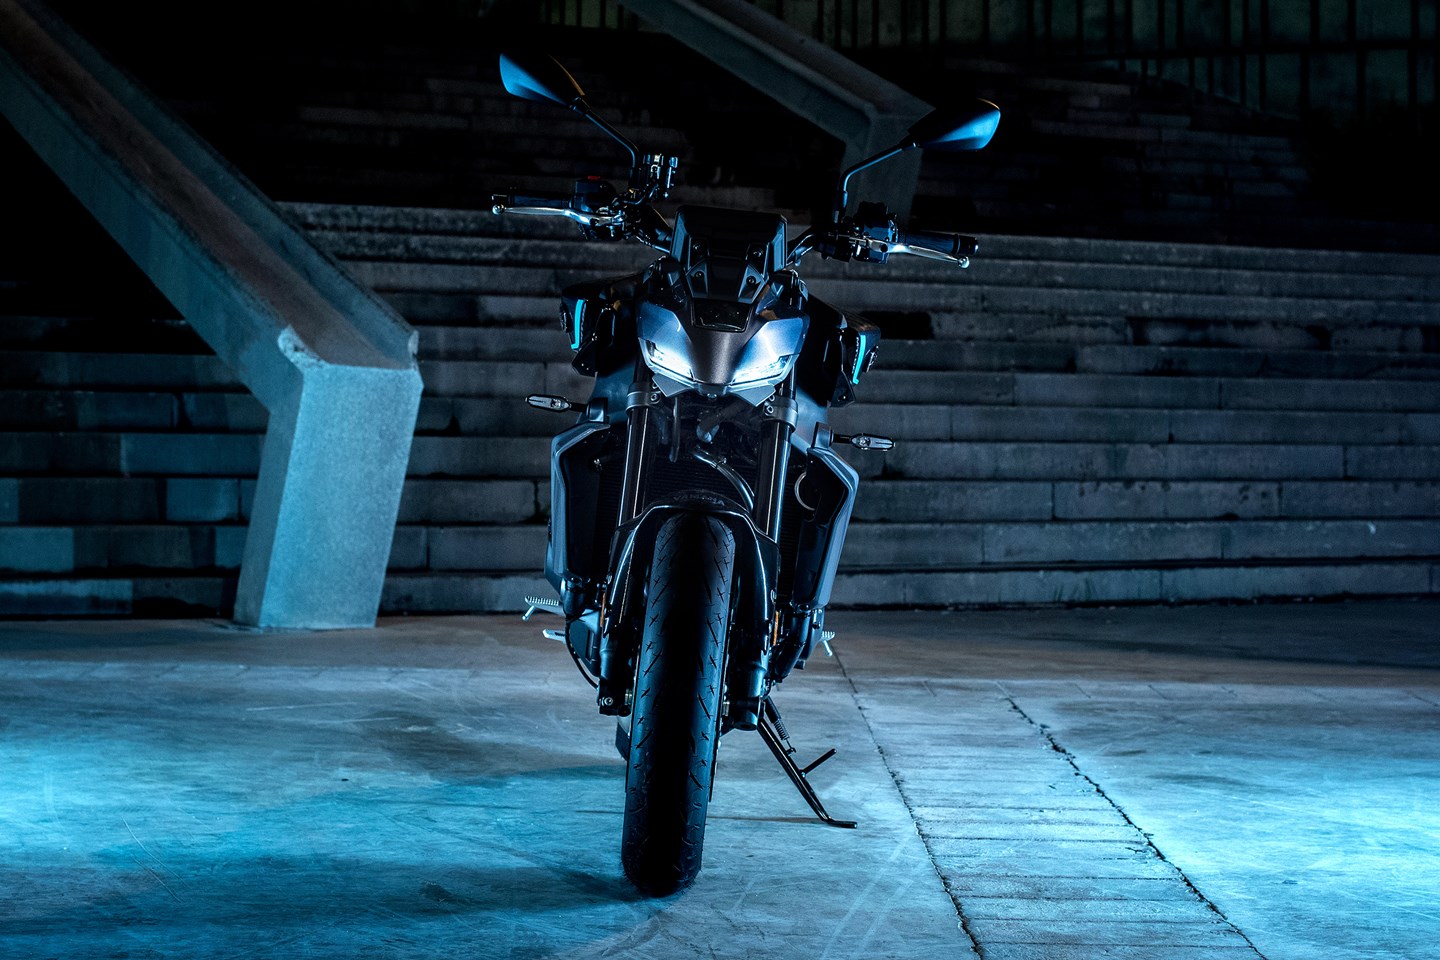 Motorcycle News: MT-09 Tracer a nova Crossover 3 cilindros da Yamaha